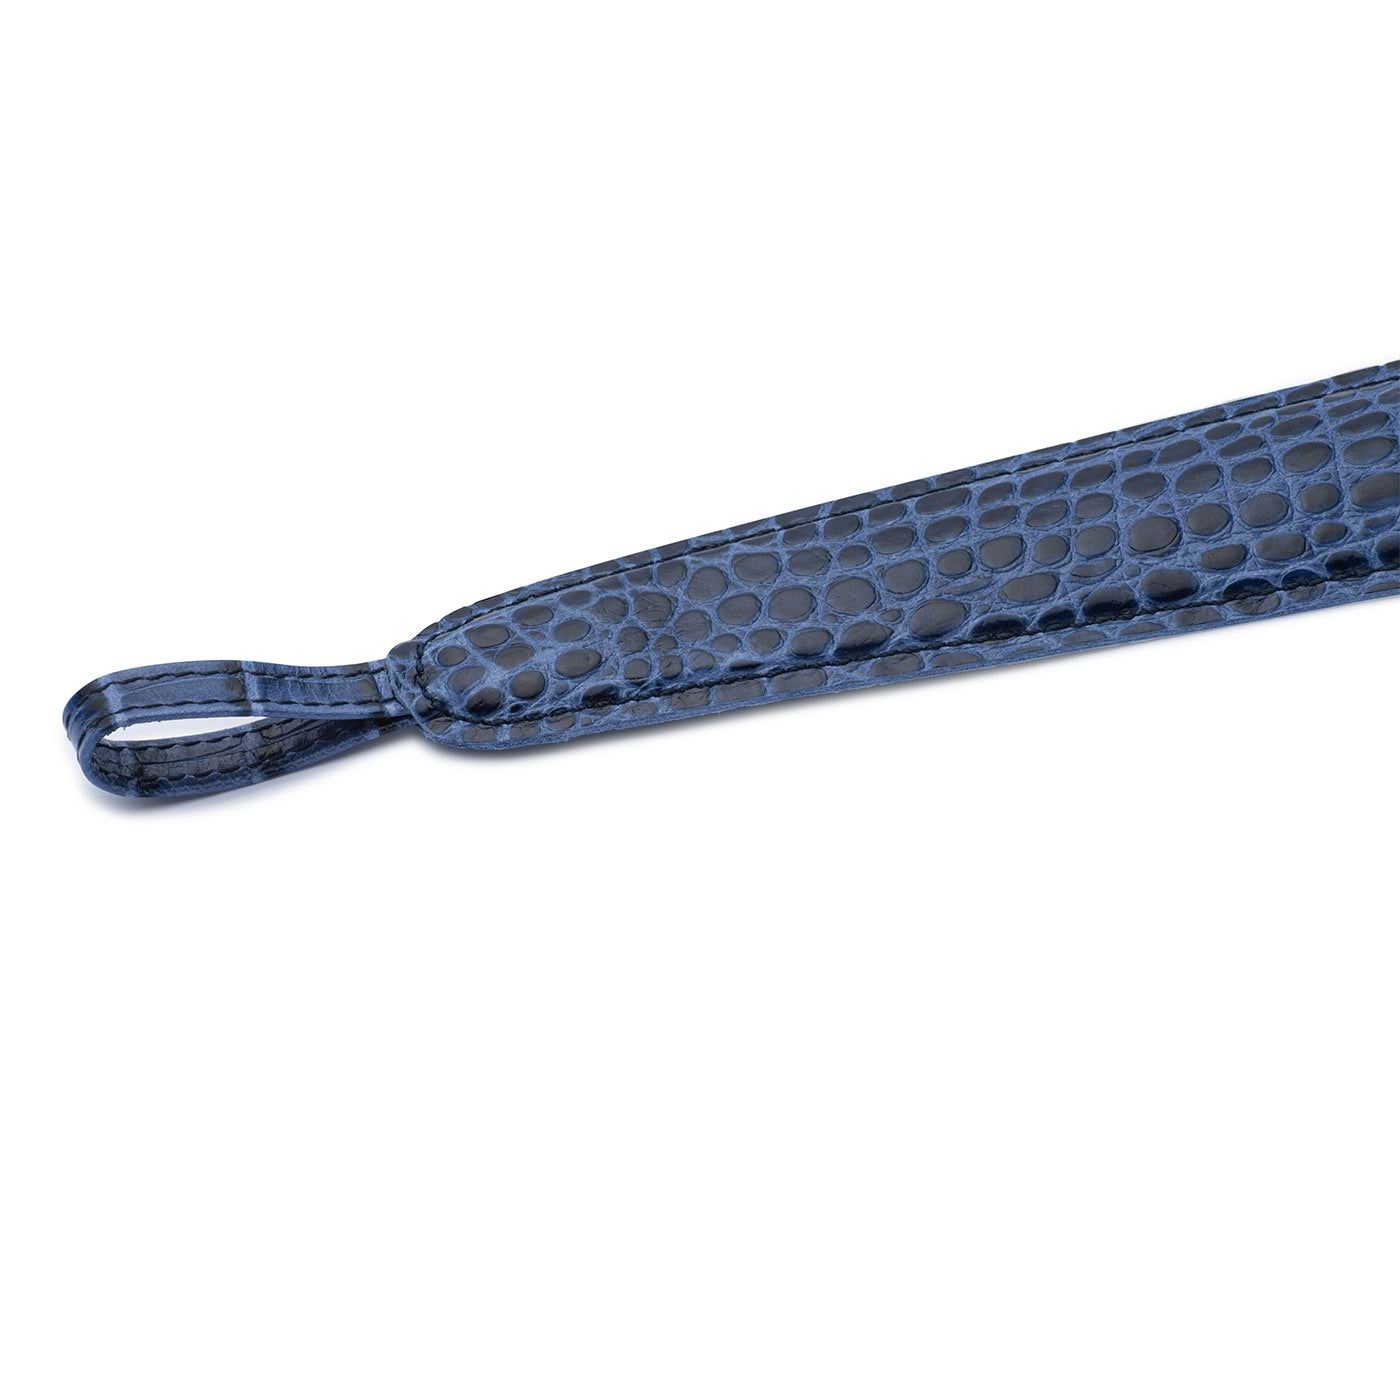 Cornet à chaussures en cuir simili-croc bleu - Vue alternative 1